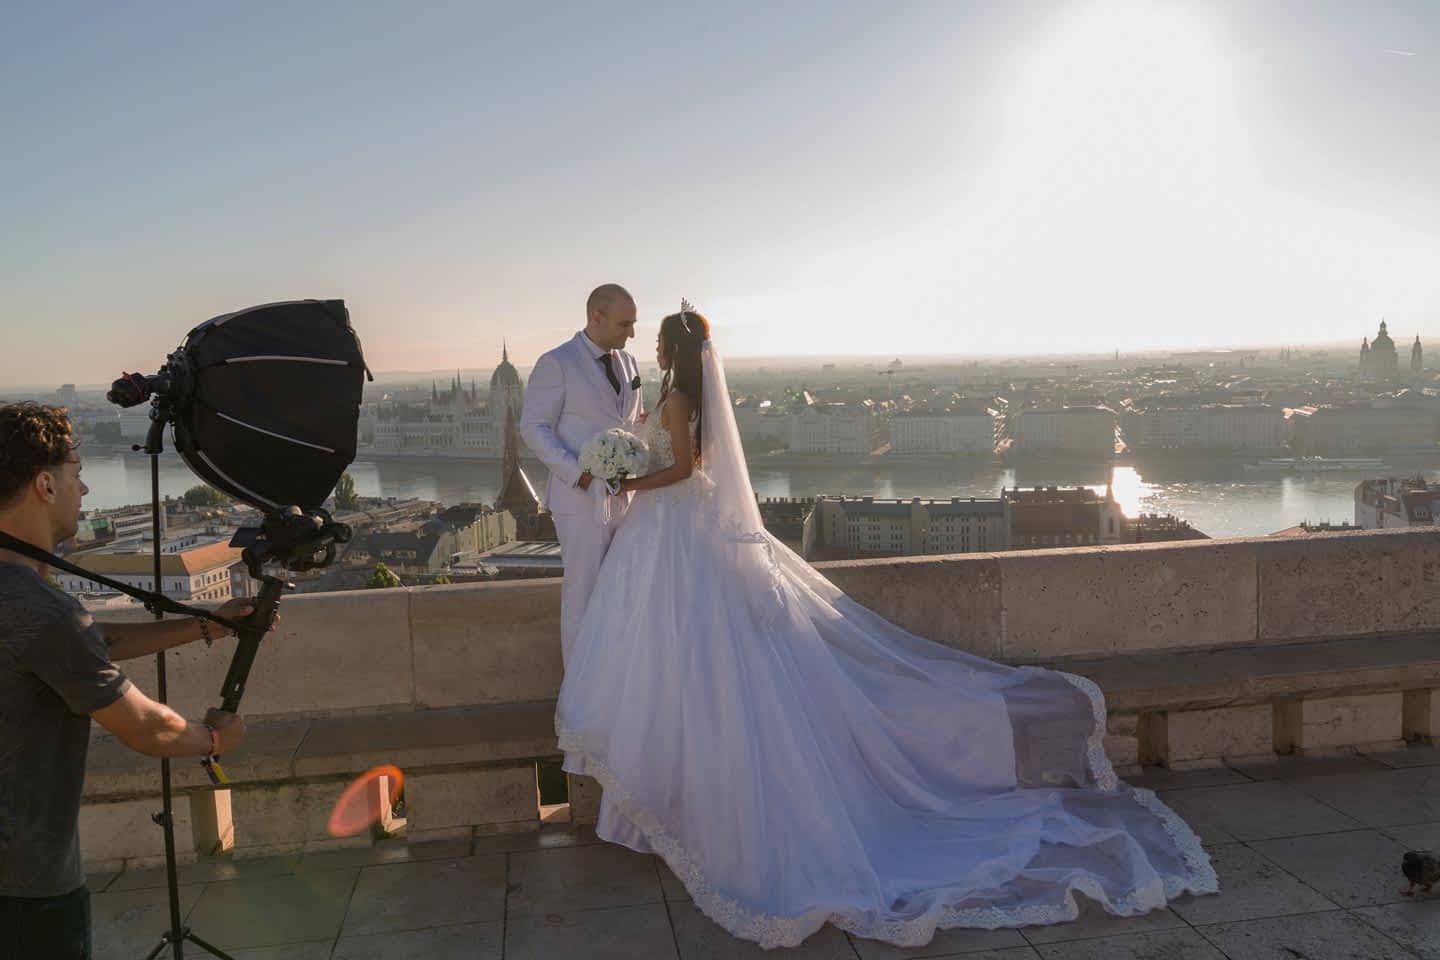 2022 Magic Proposal Photographer & Pre-Wedding Budapest BA prewedding RAW Instawalk Your memories captured by a local Photographer / Videographer in Budapest.